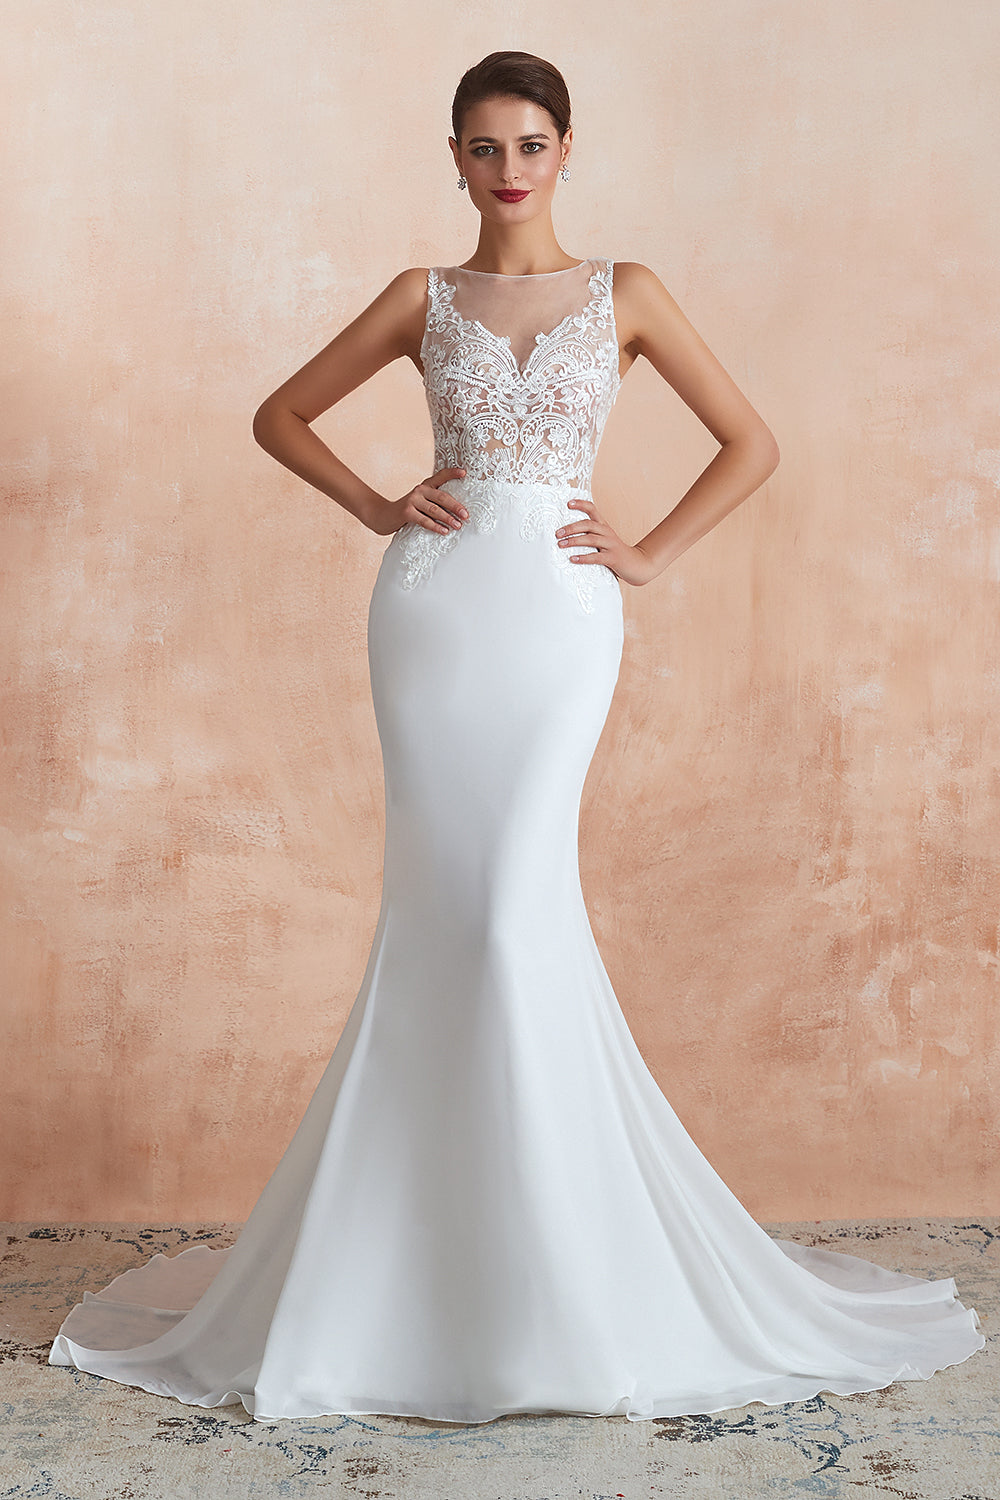 Beautiful Mermaid V-Neck White Lace Wedding Dresses Affordable Online-27dress